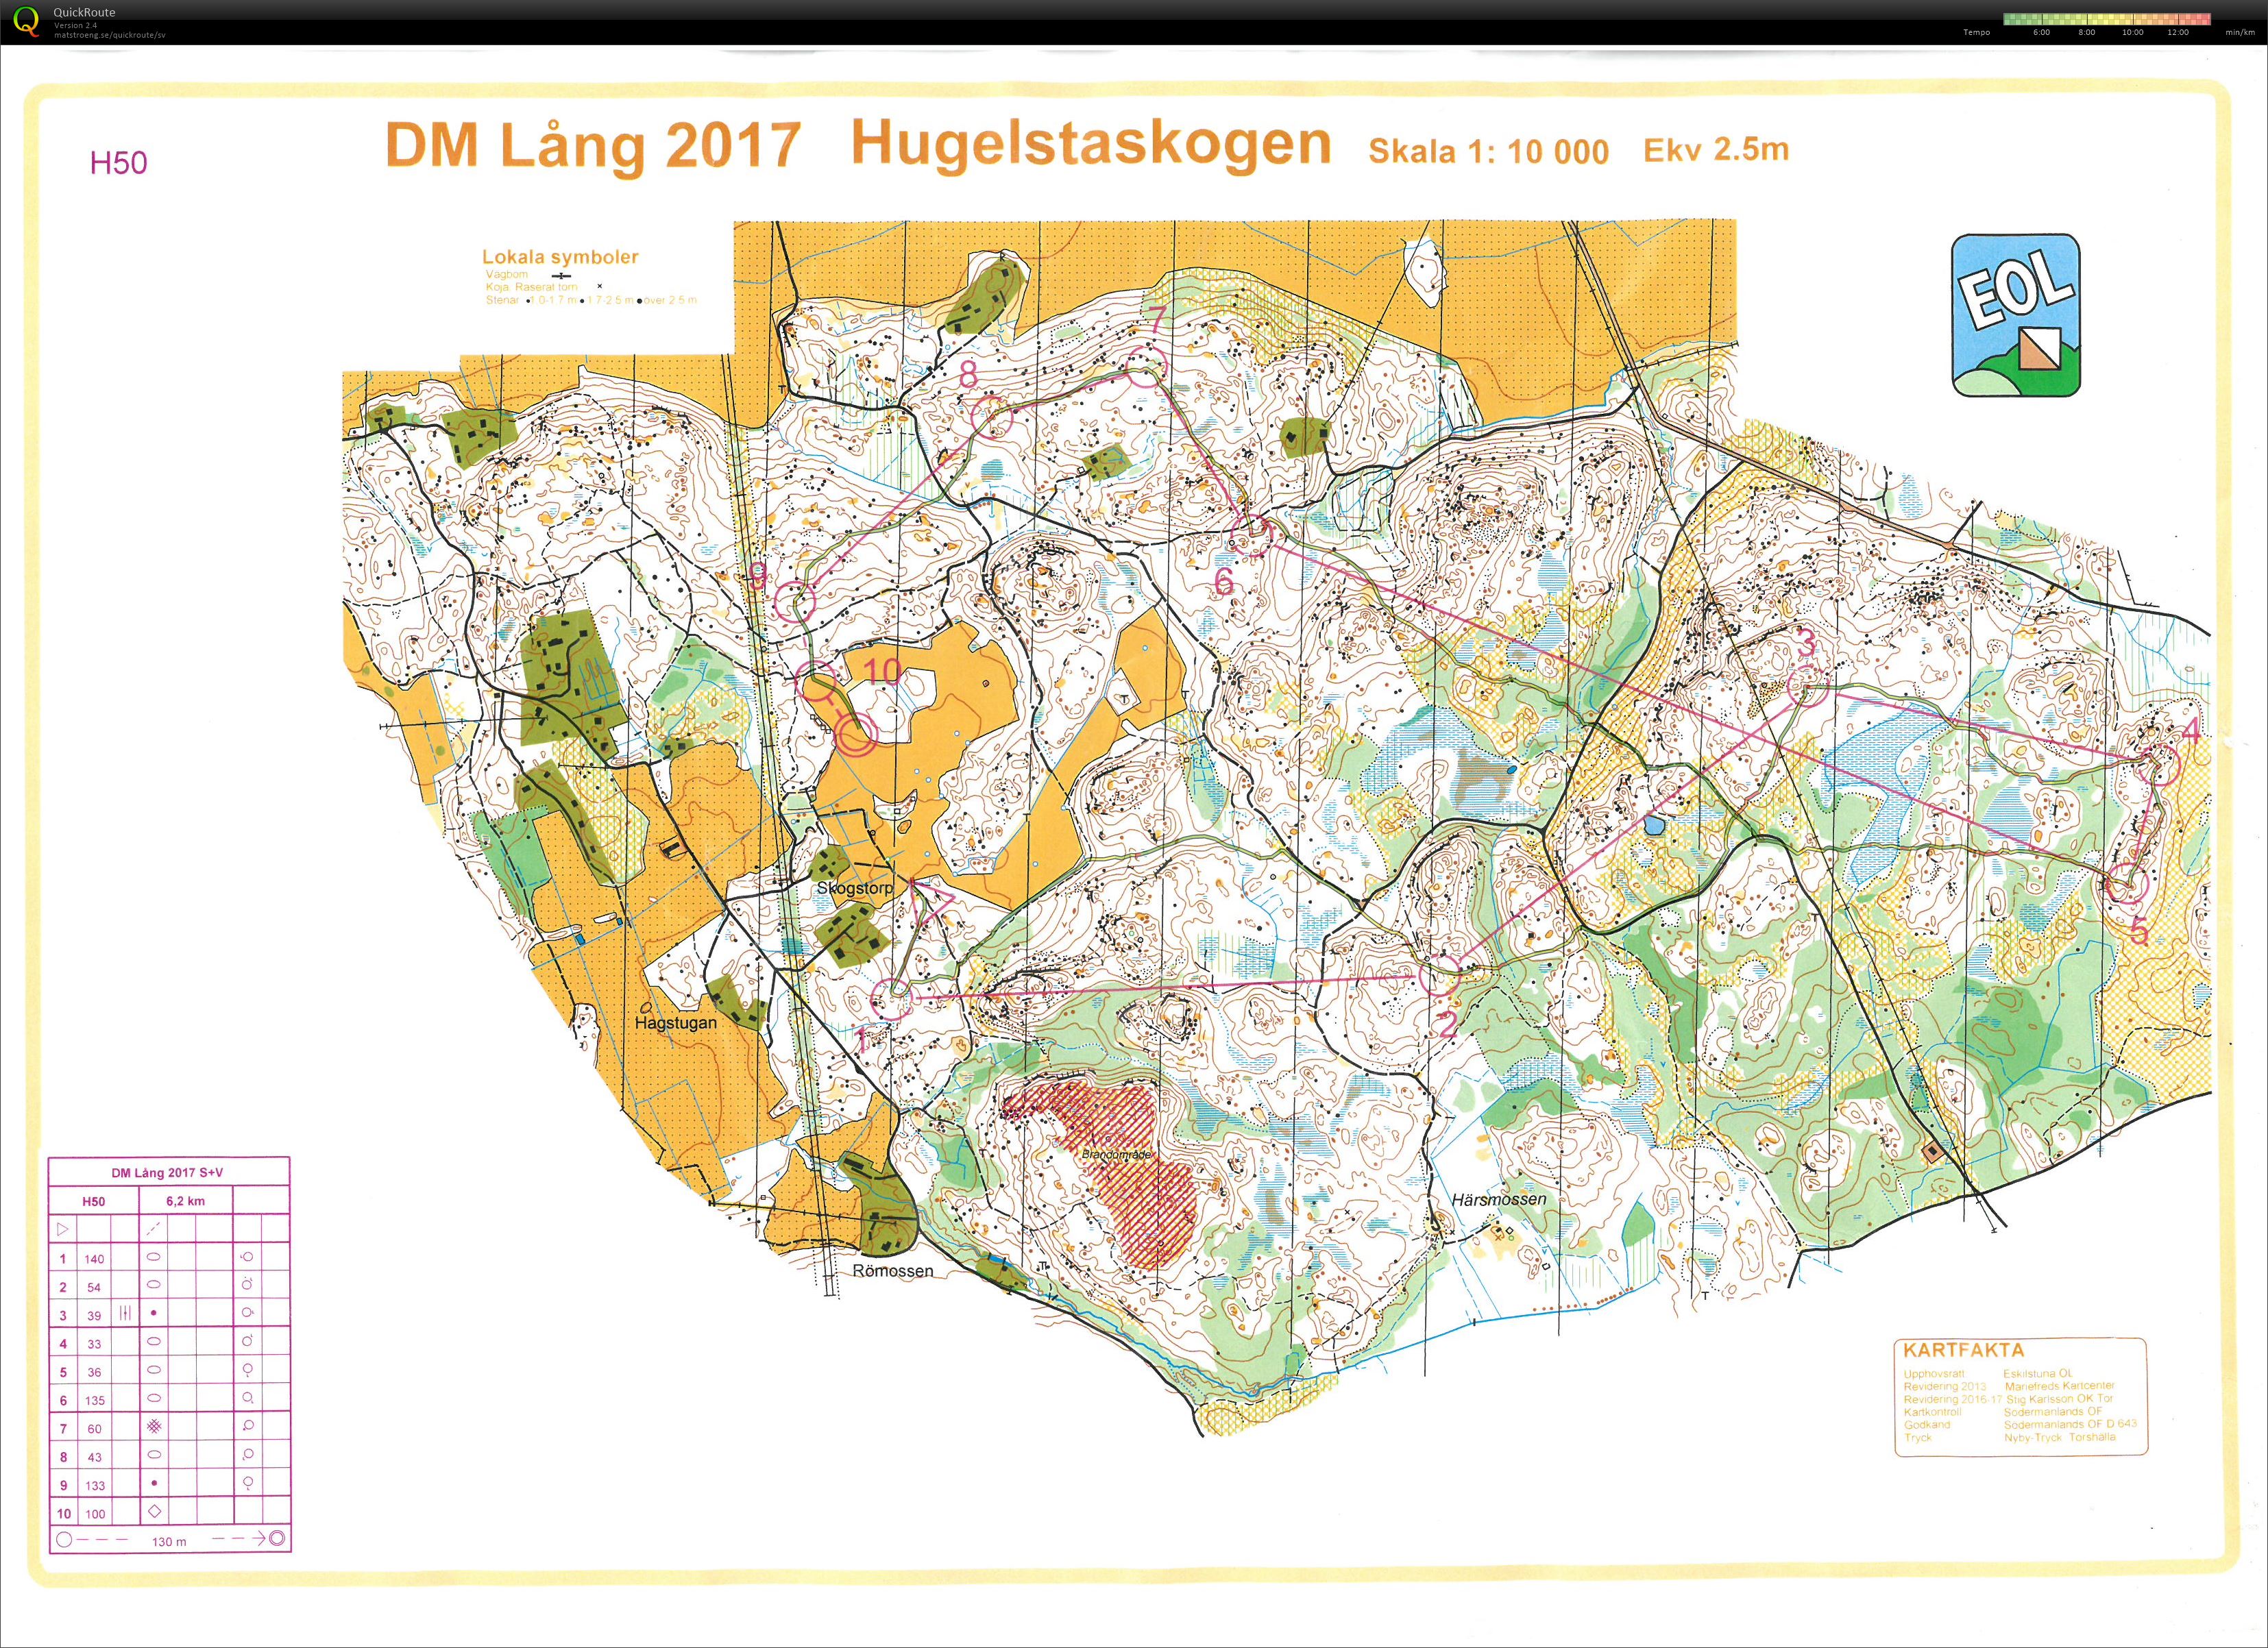 DM-Lång (03.09.2017)